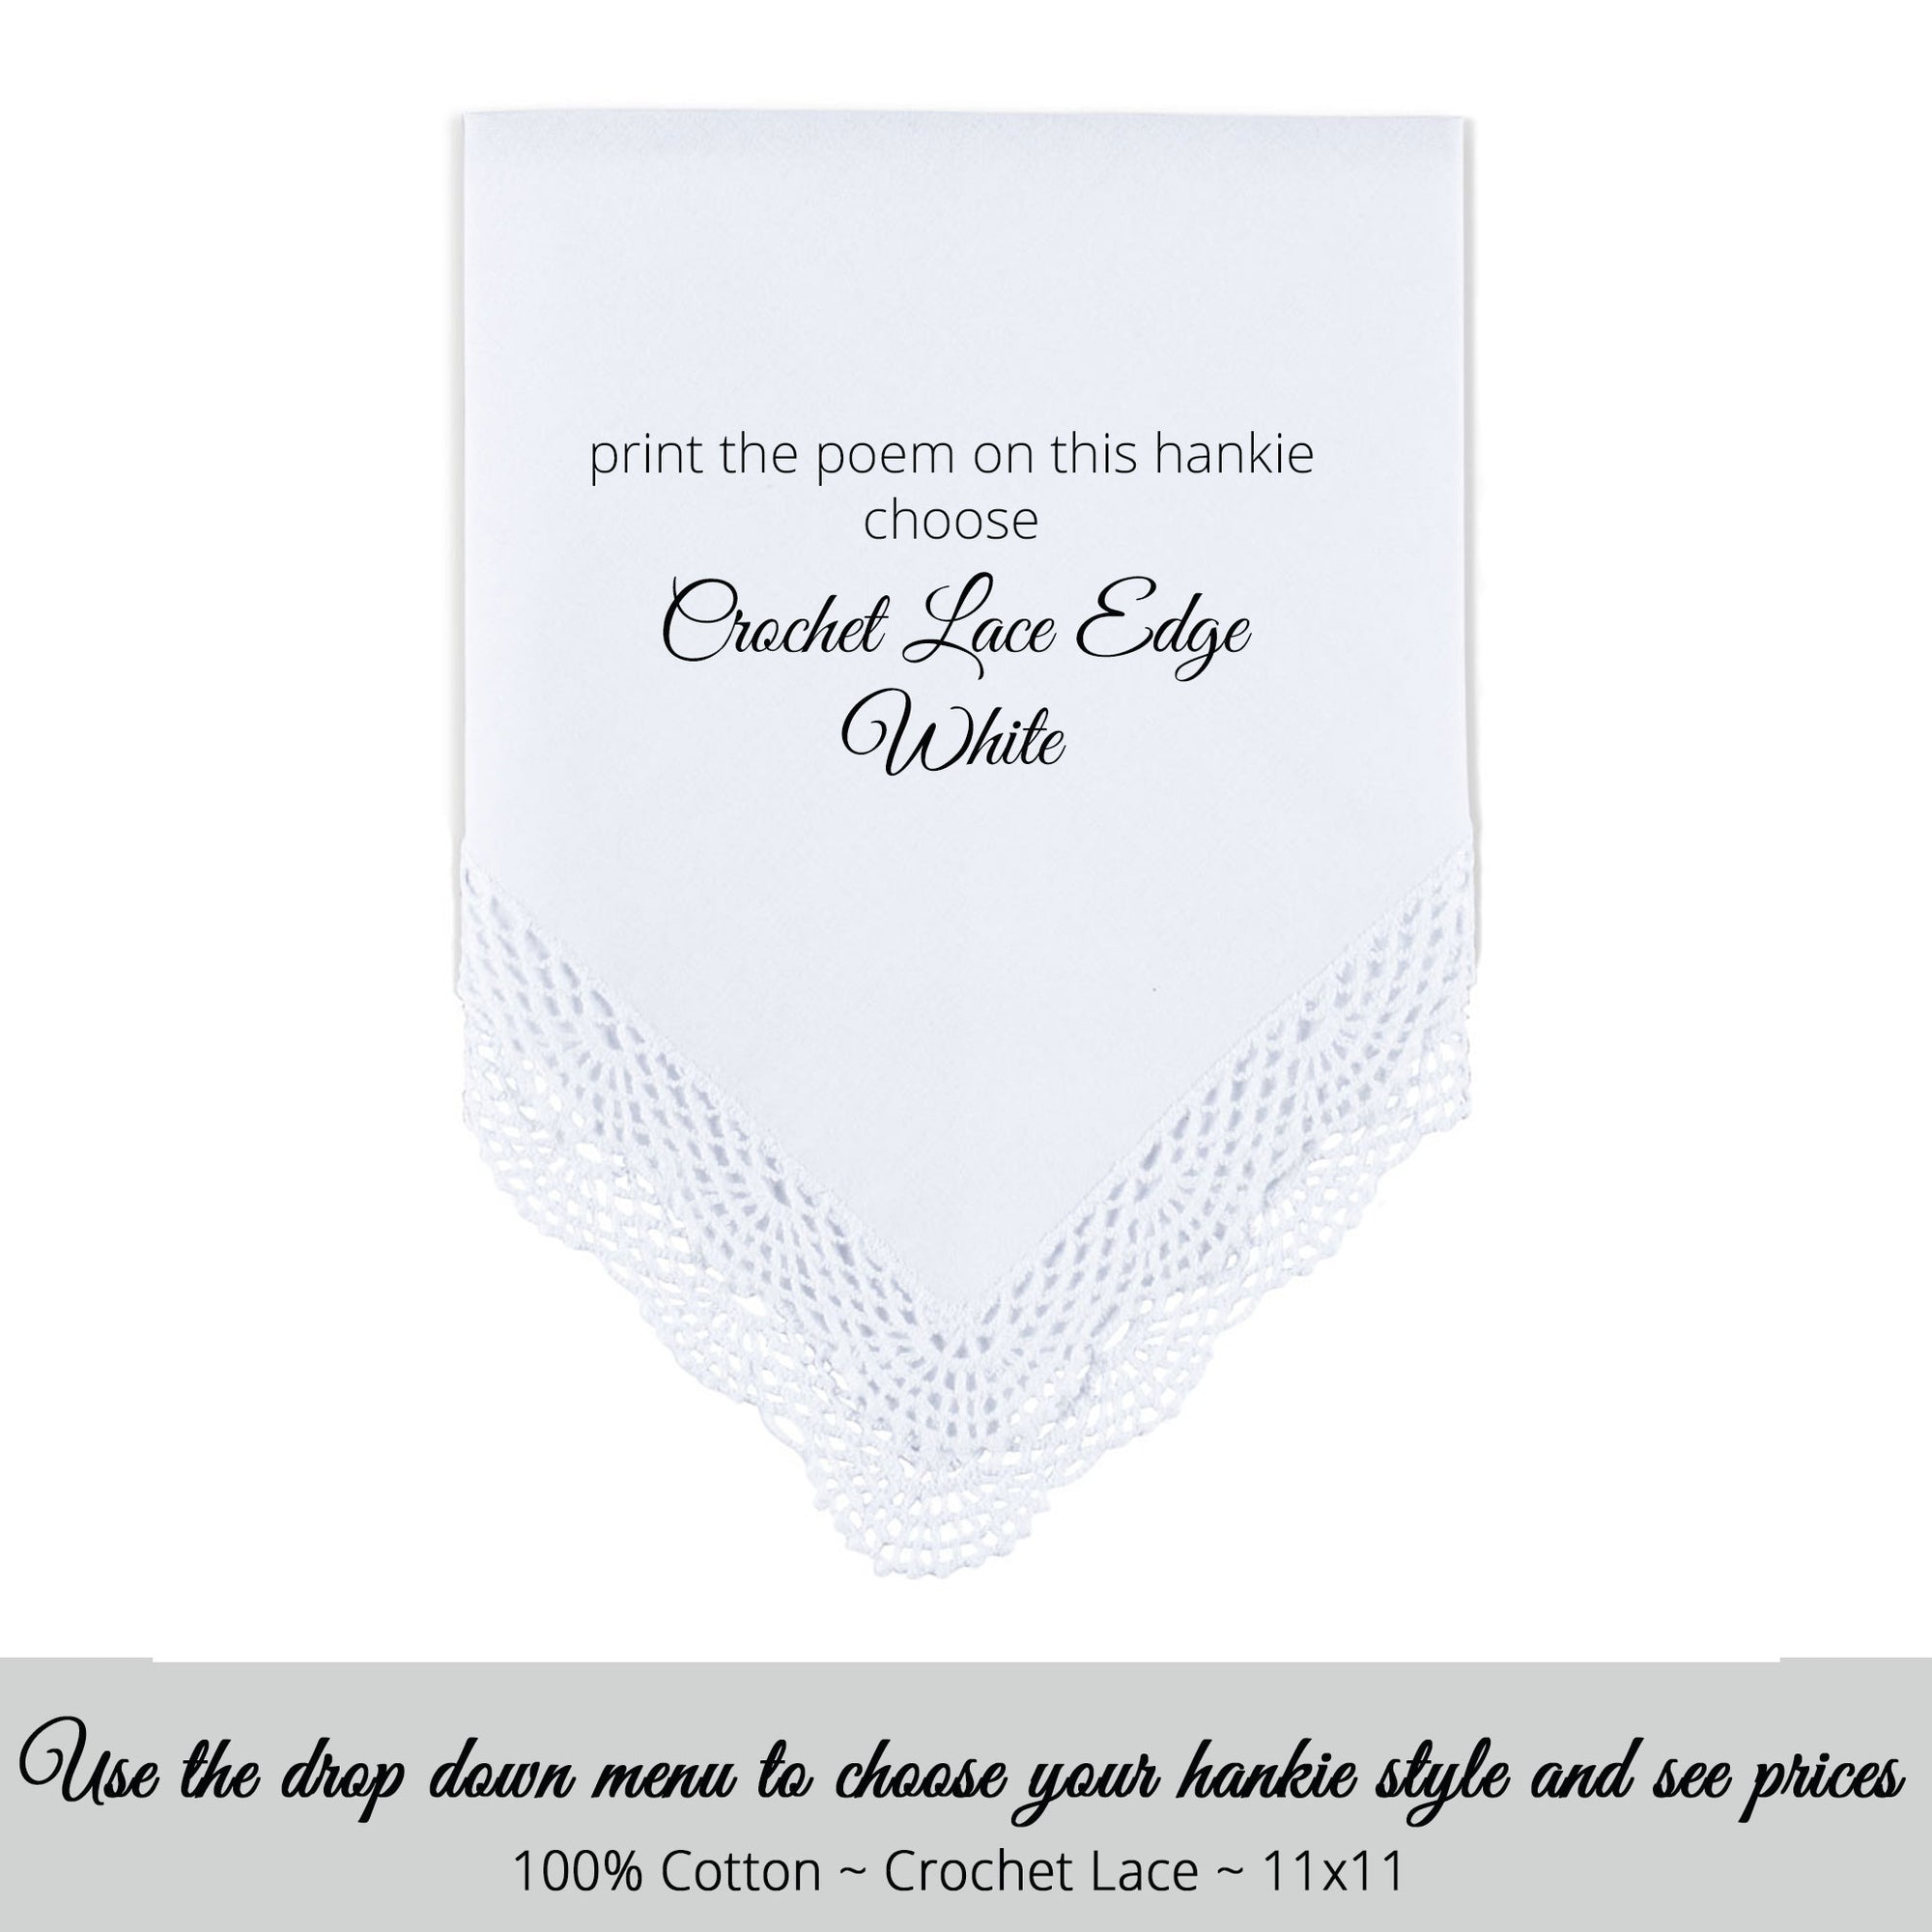 Wedding handkerchief white with crochet lace edge for custom printed hankie